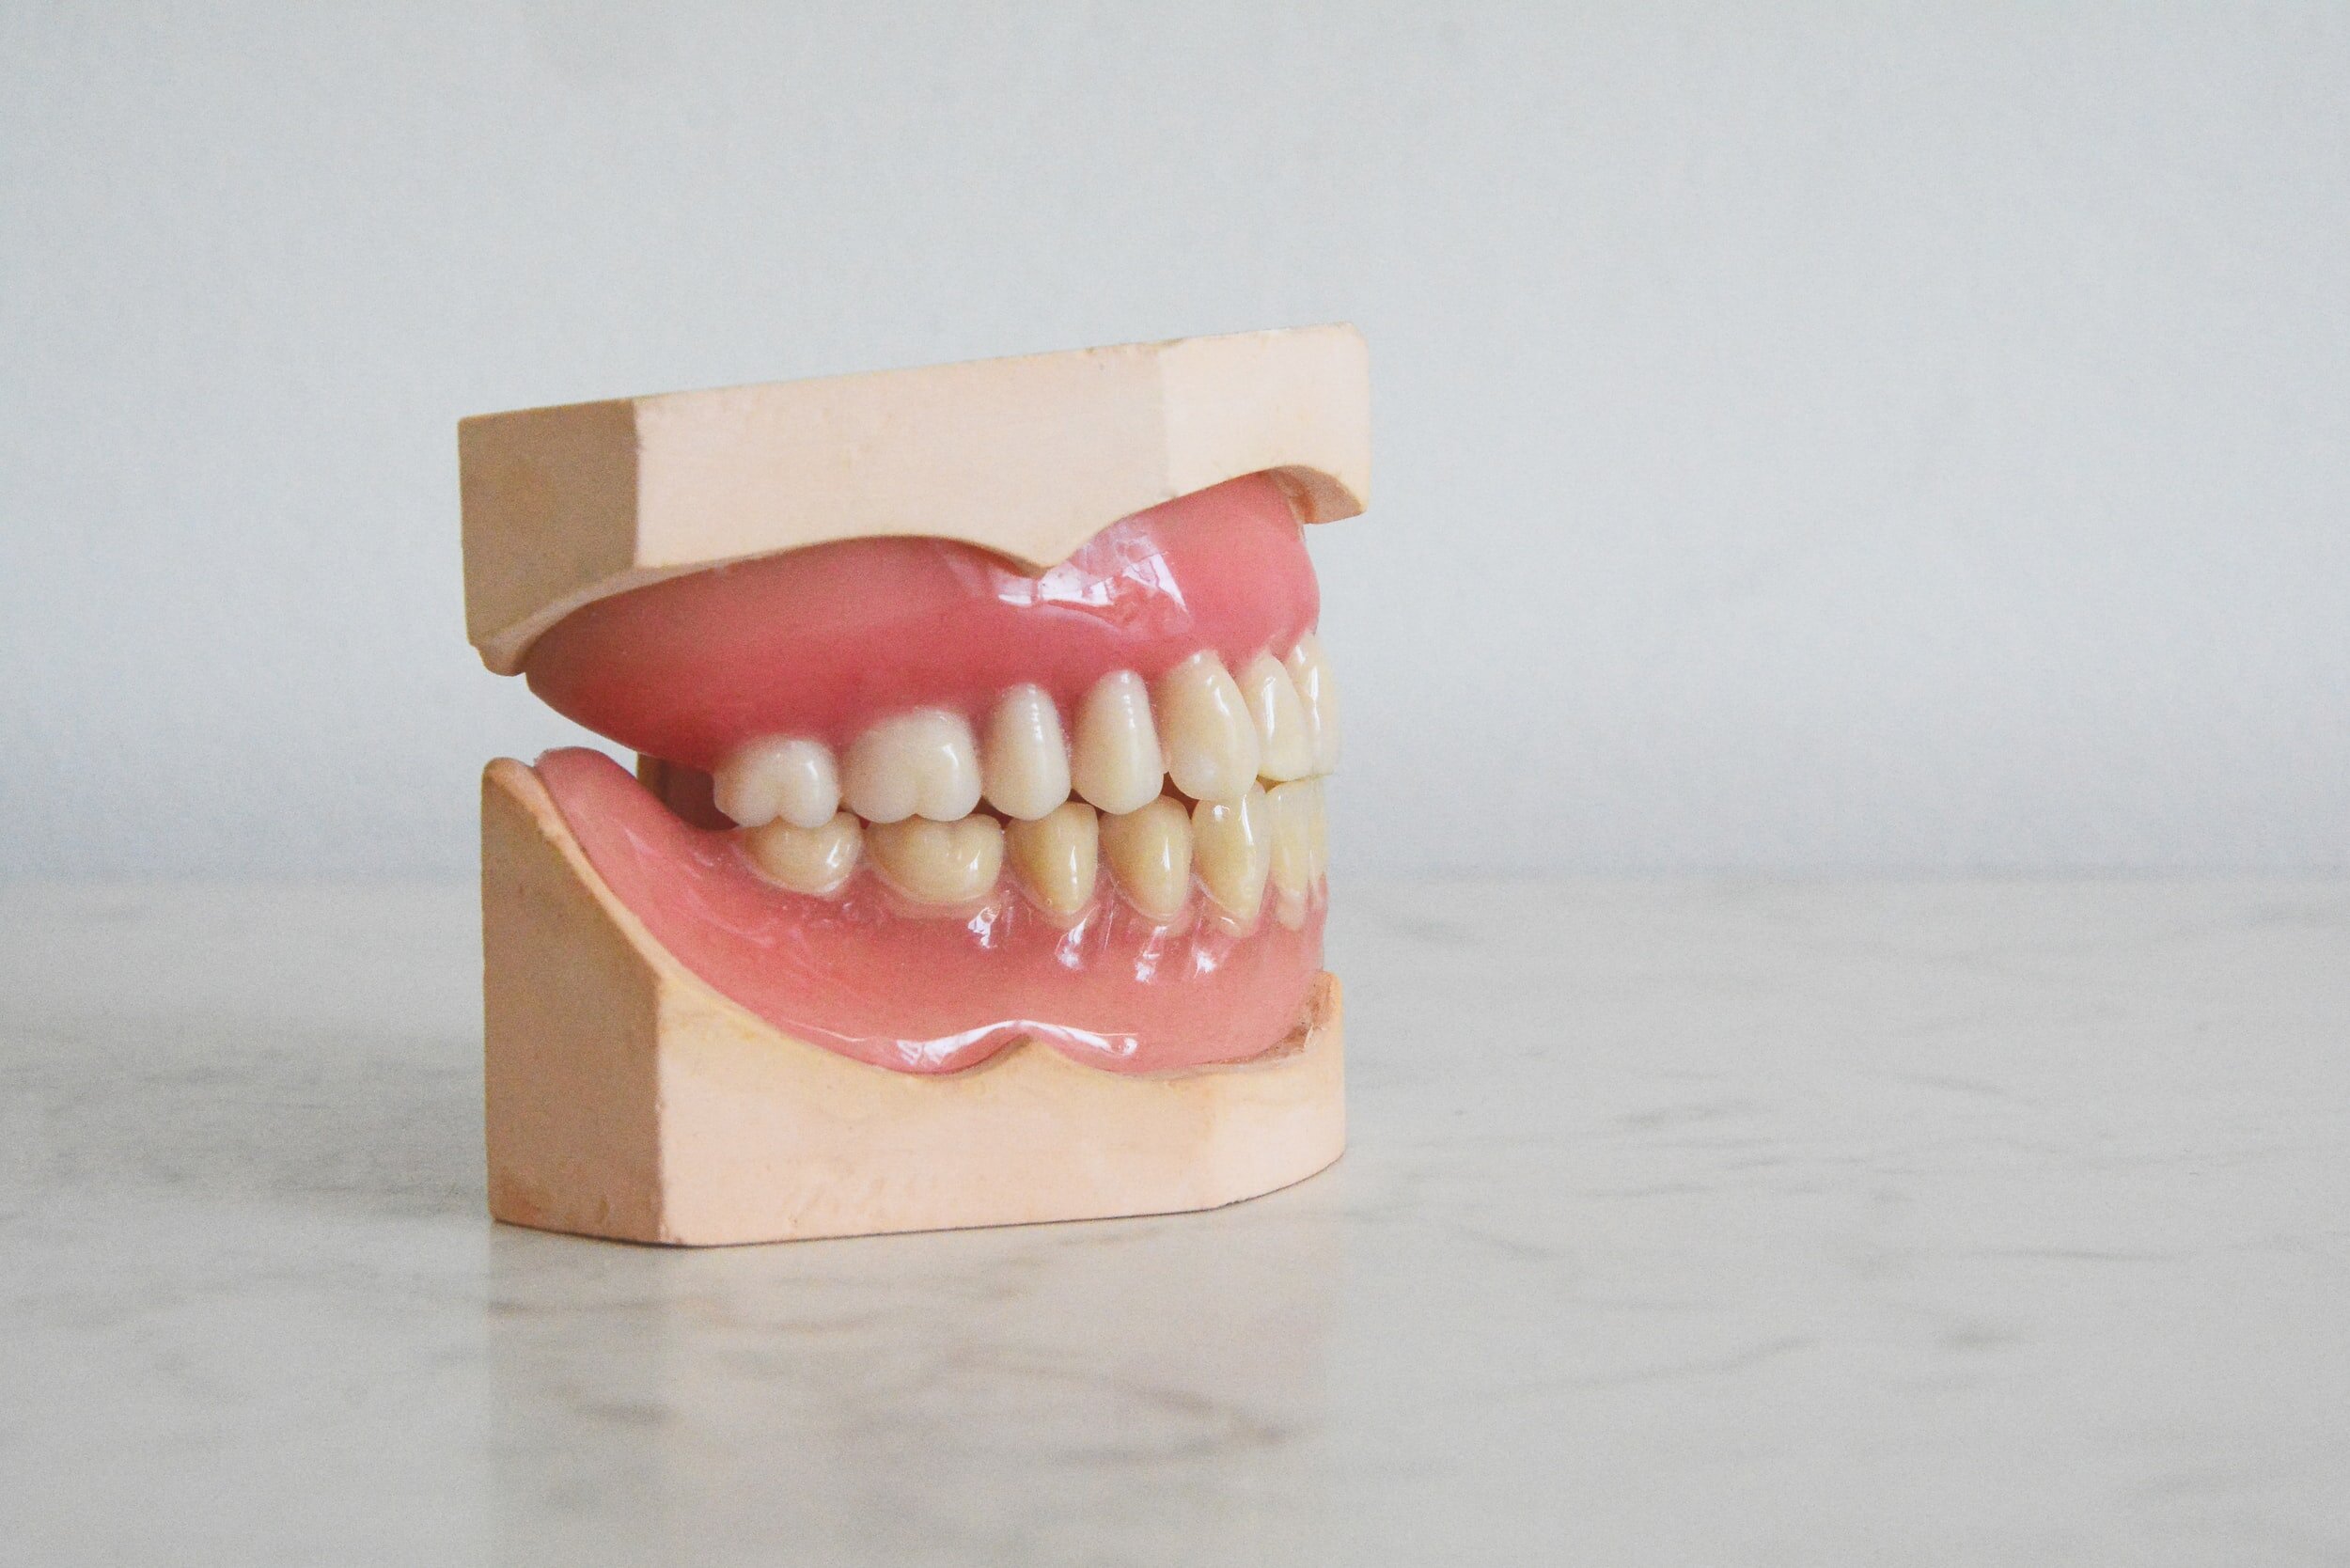 Image shows a dental mold